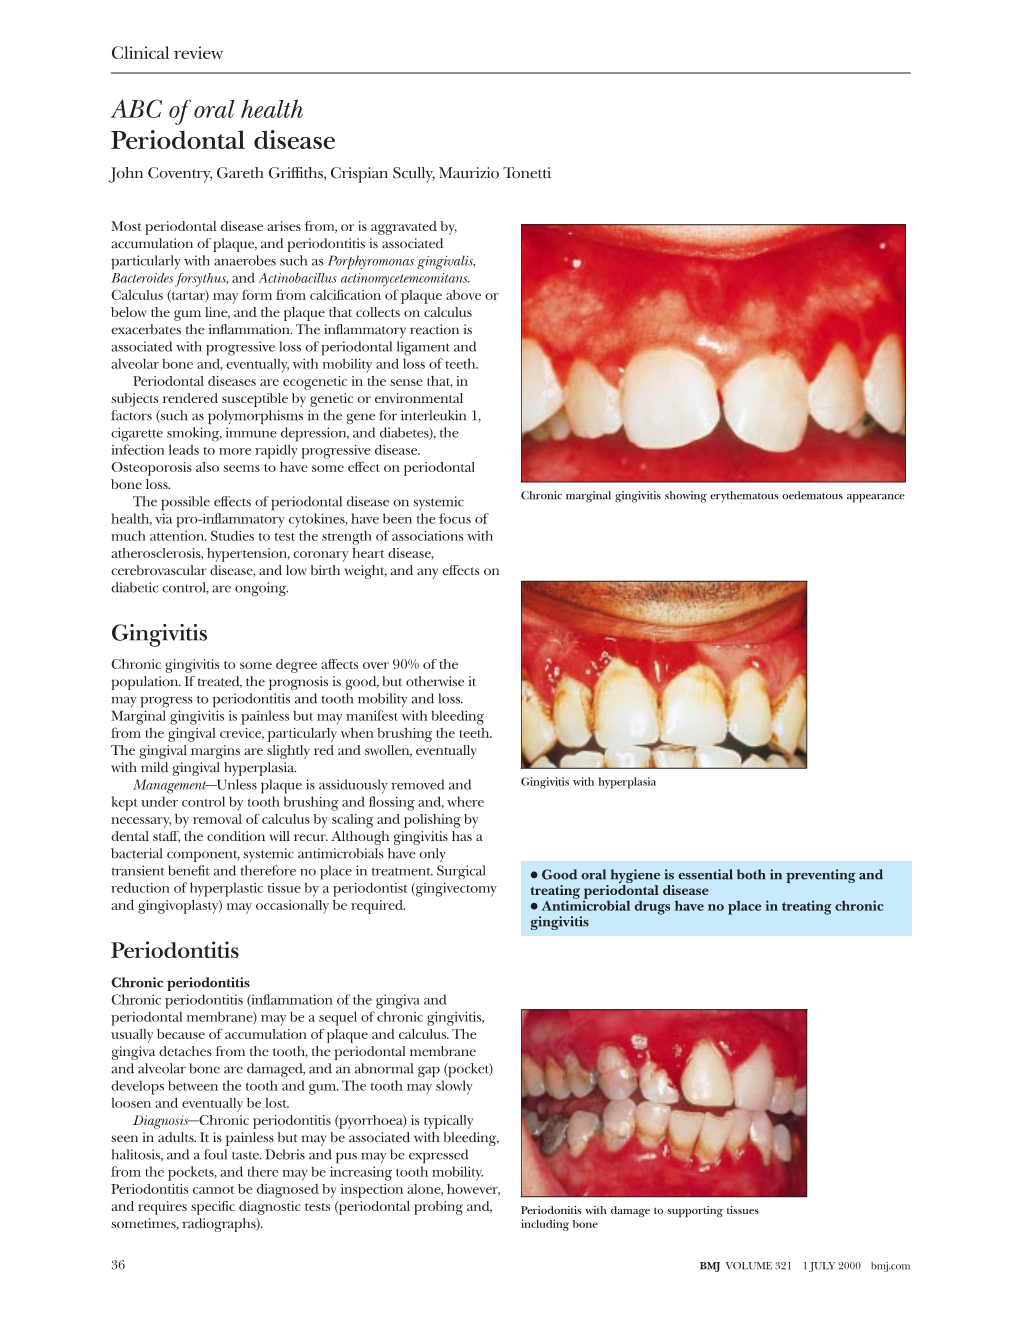 ABC of Oral Health Periodontal Disease John Coventry, Gareth Griffiths, Crispian Scully, Maurizio Tonetti